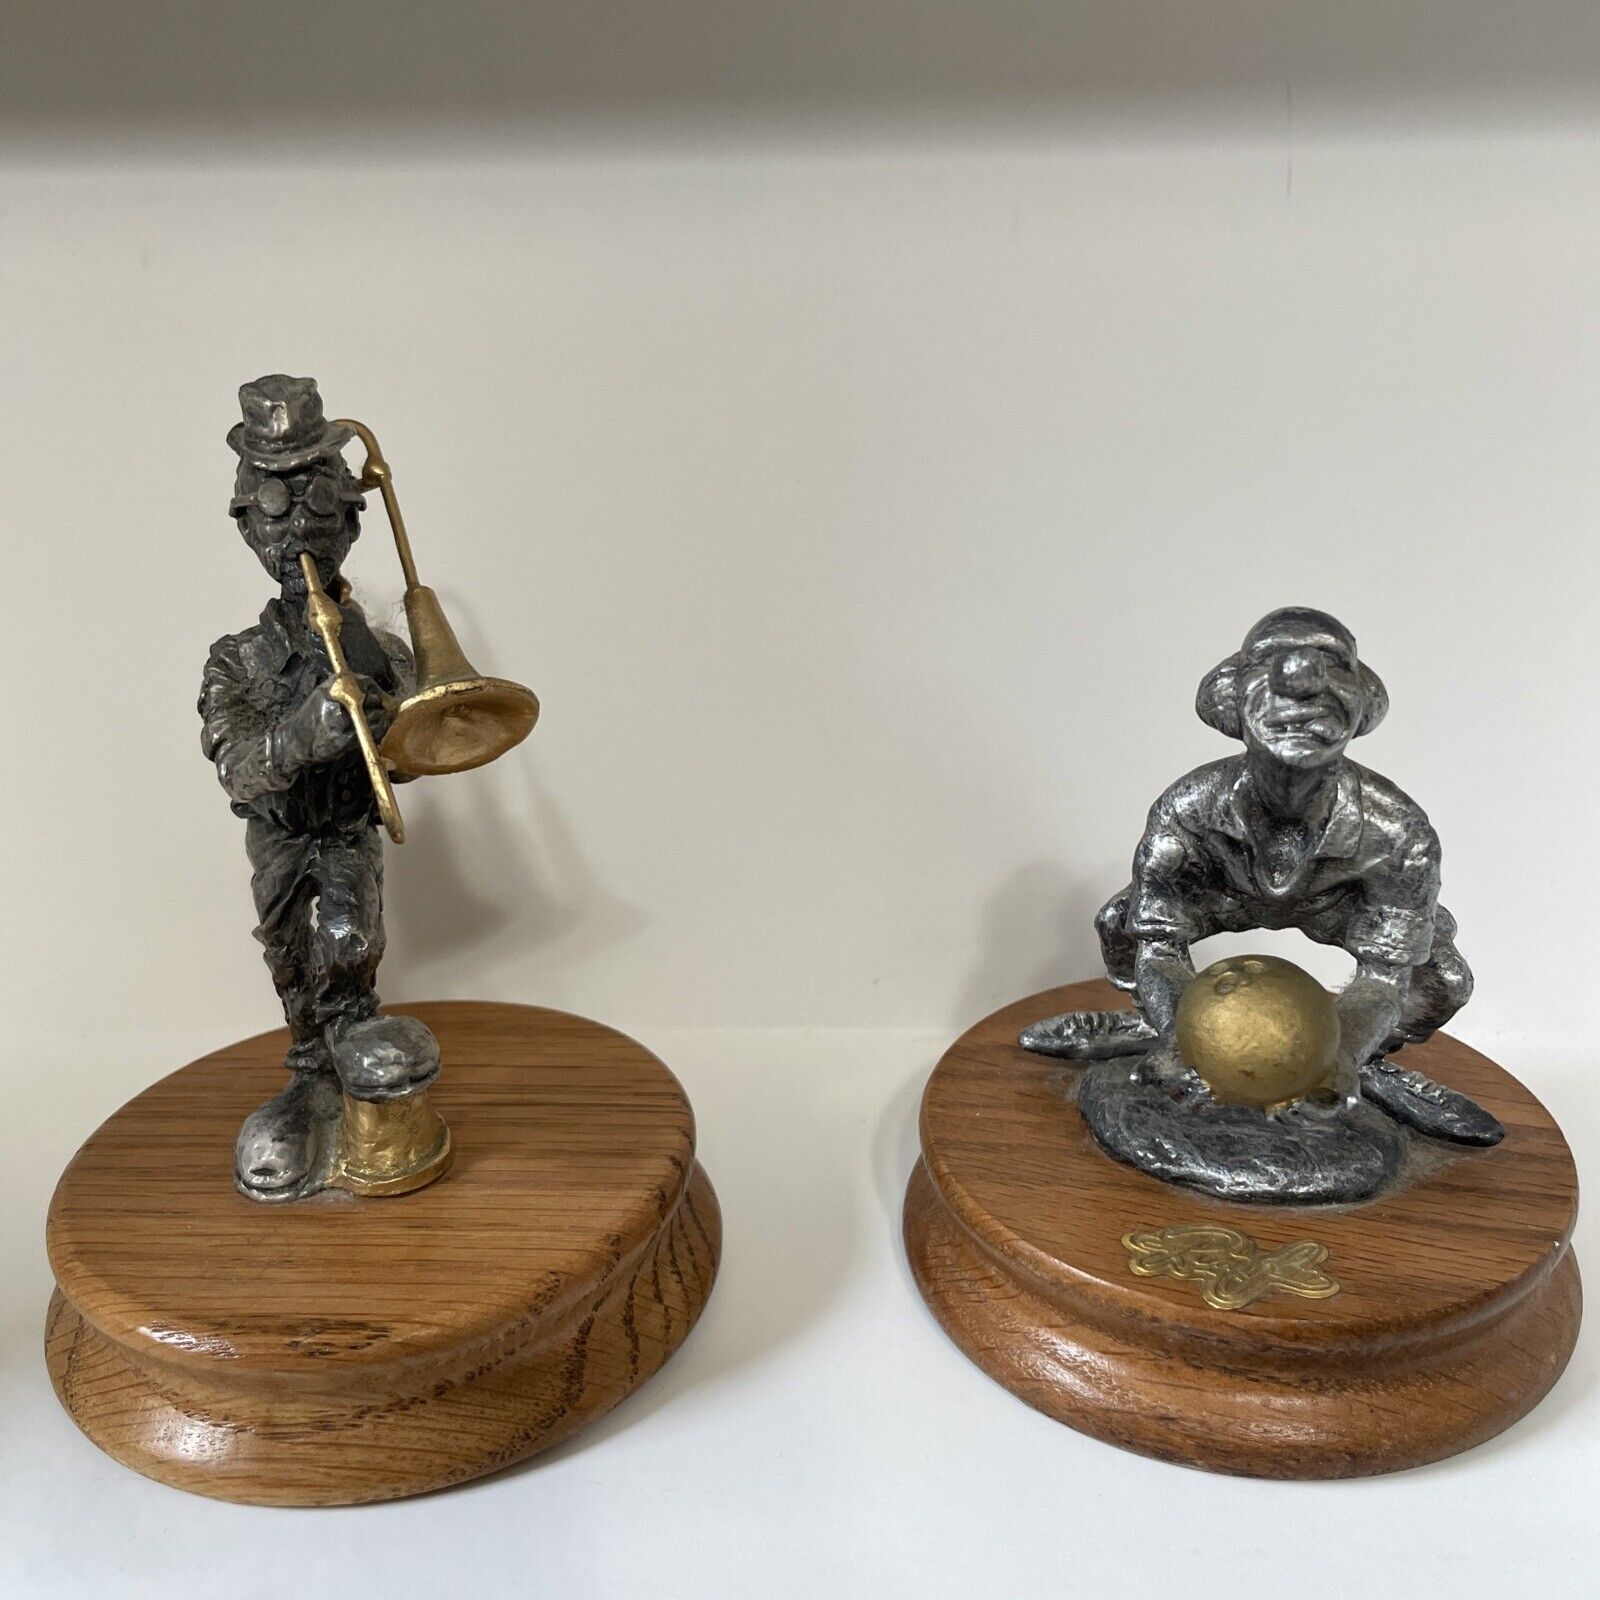 VTG Ron Lee Hobo Sportsman Bowler/ Hobo Band Collection Cute Metal Figurines